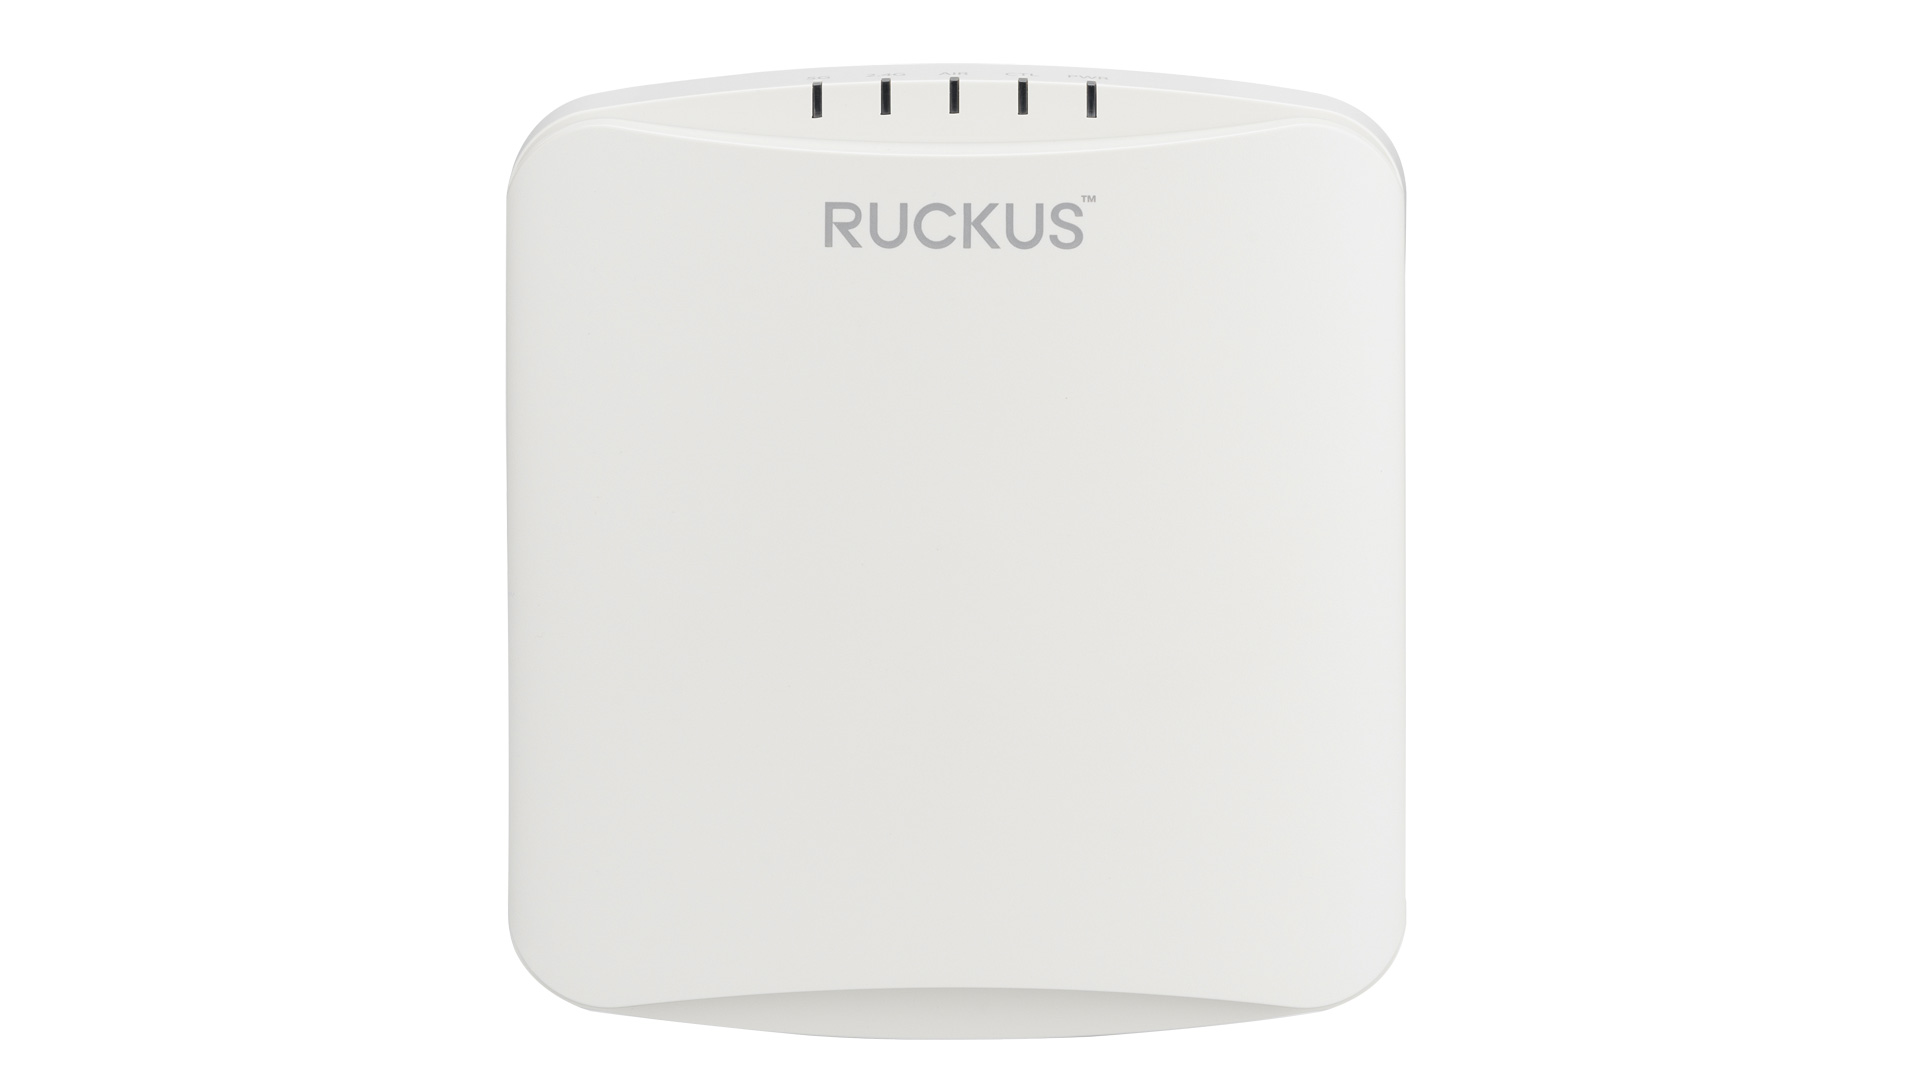 Ruckus Wireless R350 unleashed